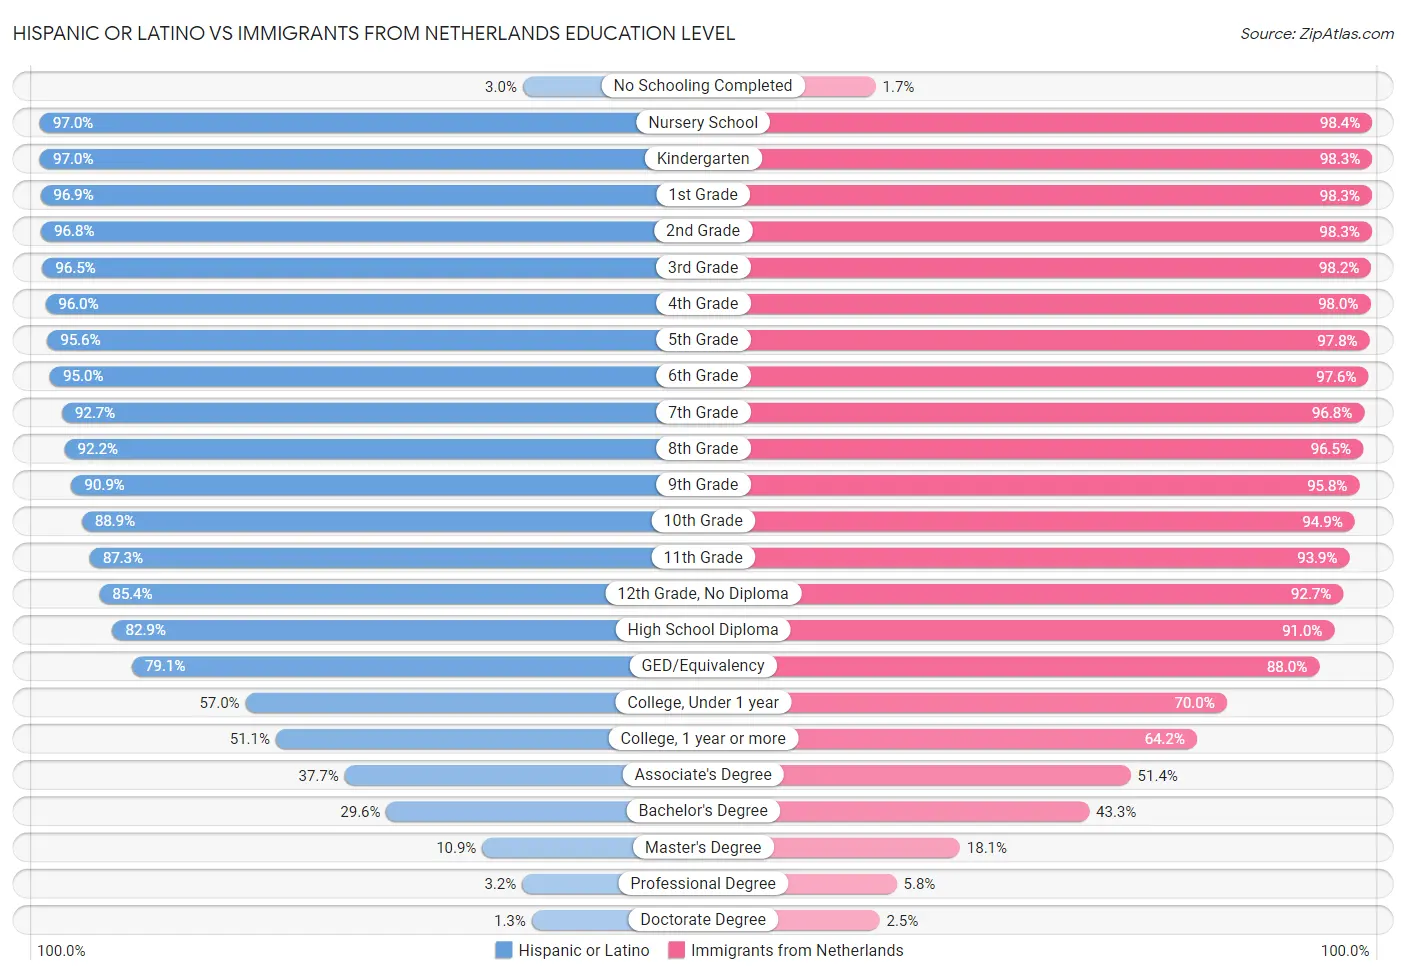 Hispanic or Latino vs Immigrants from Netherlands Education Level